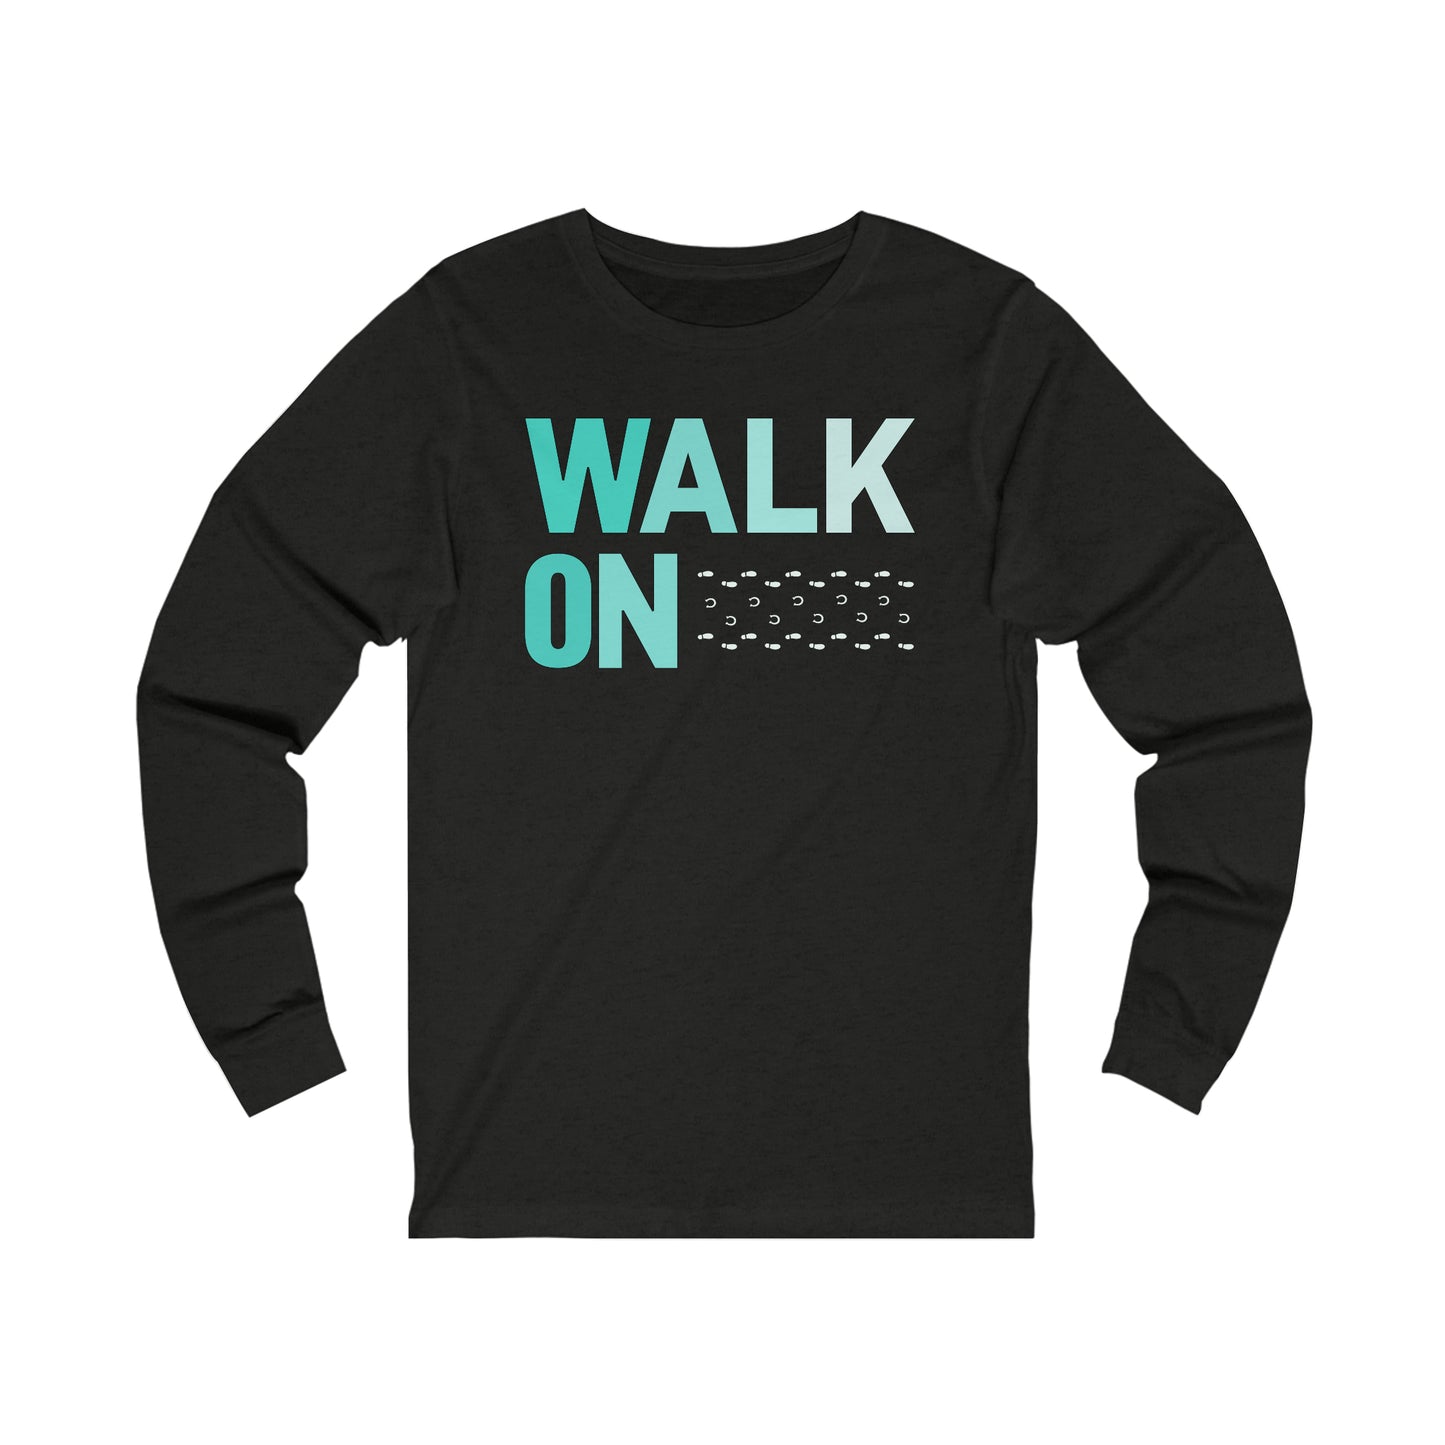 WALK ON- hoof and foot prints- unisex long sleeve shirt